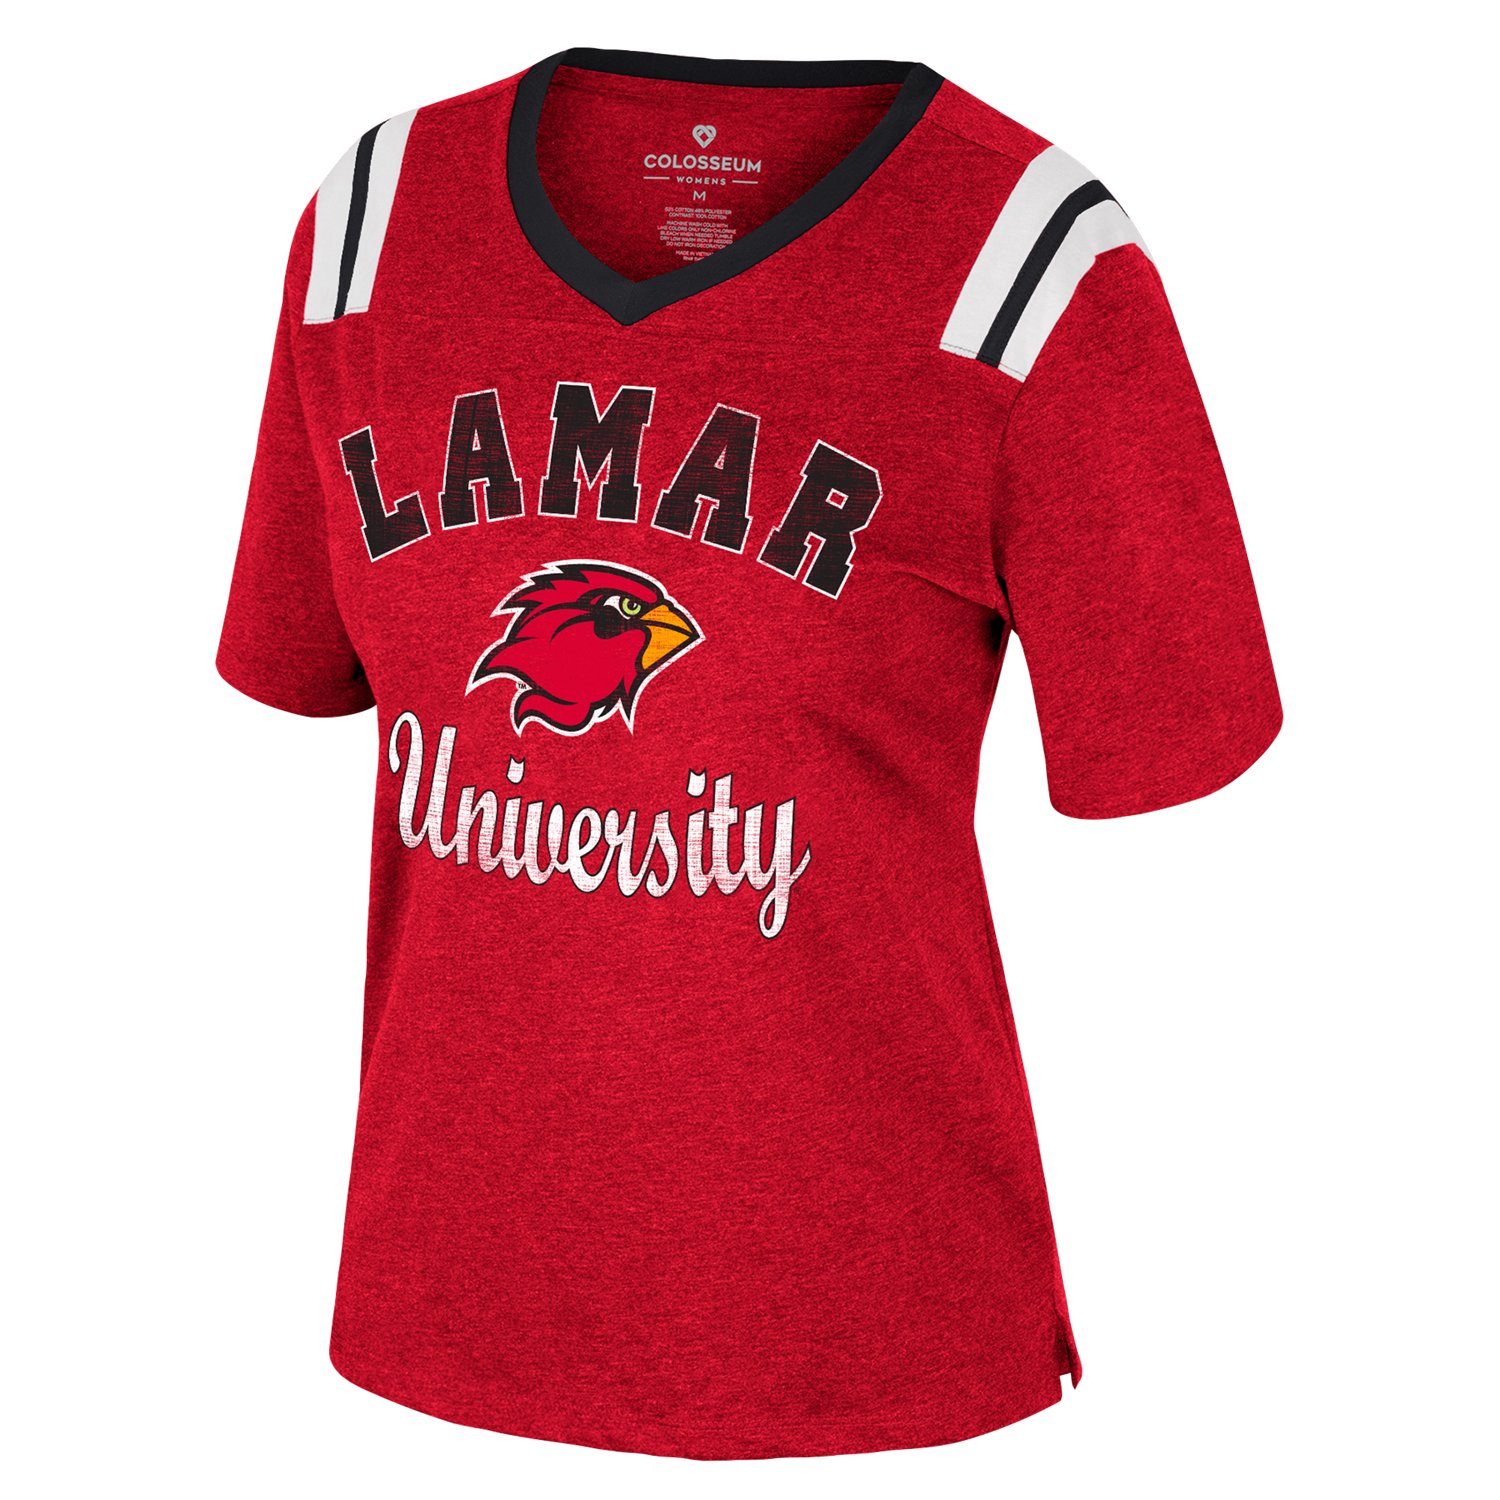 Colosseum Athletics Women's Lamar University Garden State T-shirt